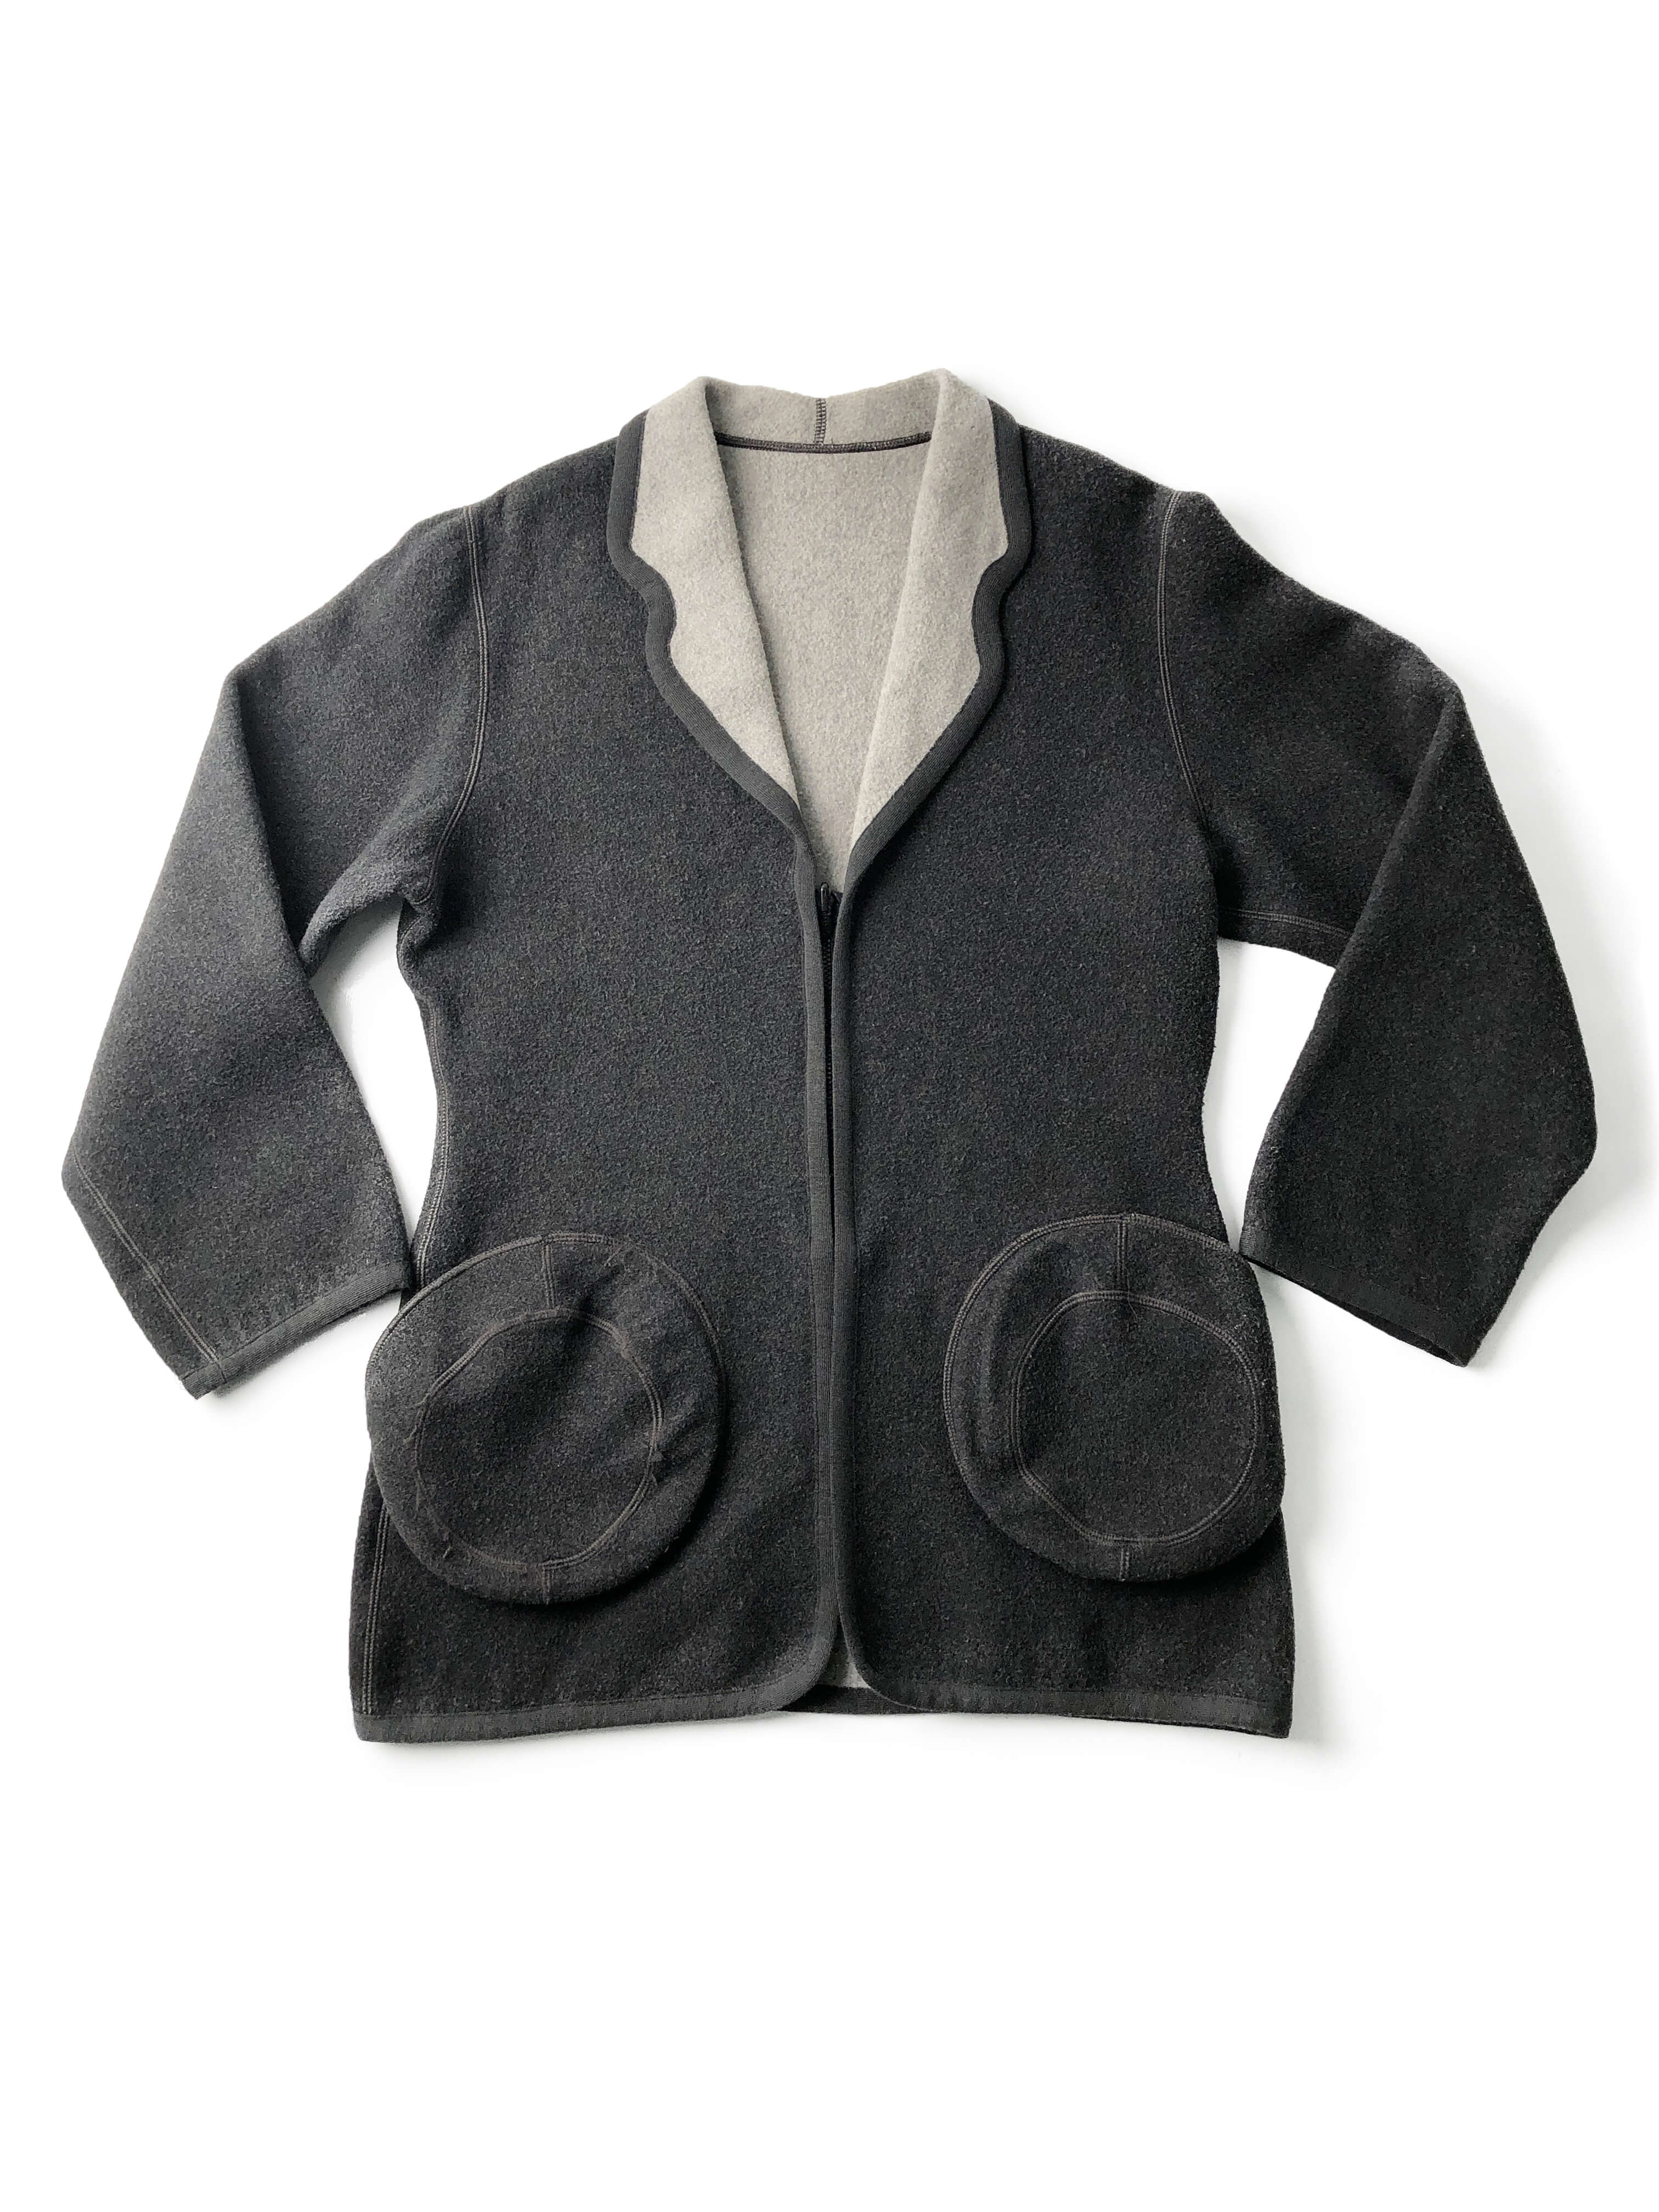 JUNKO KOSHINO circle pocket coat